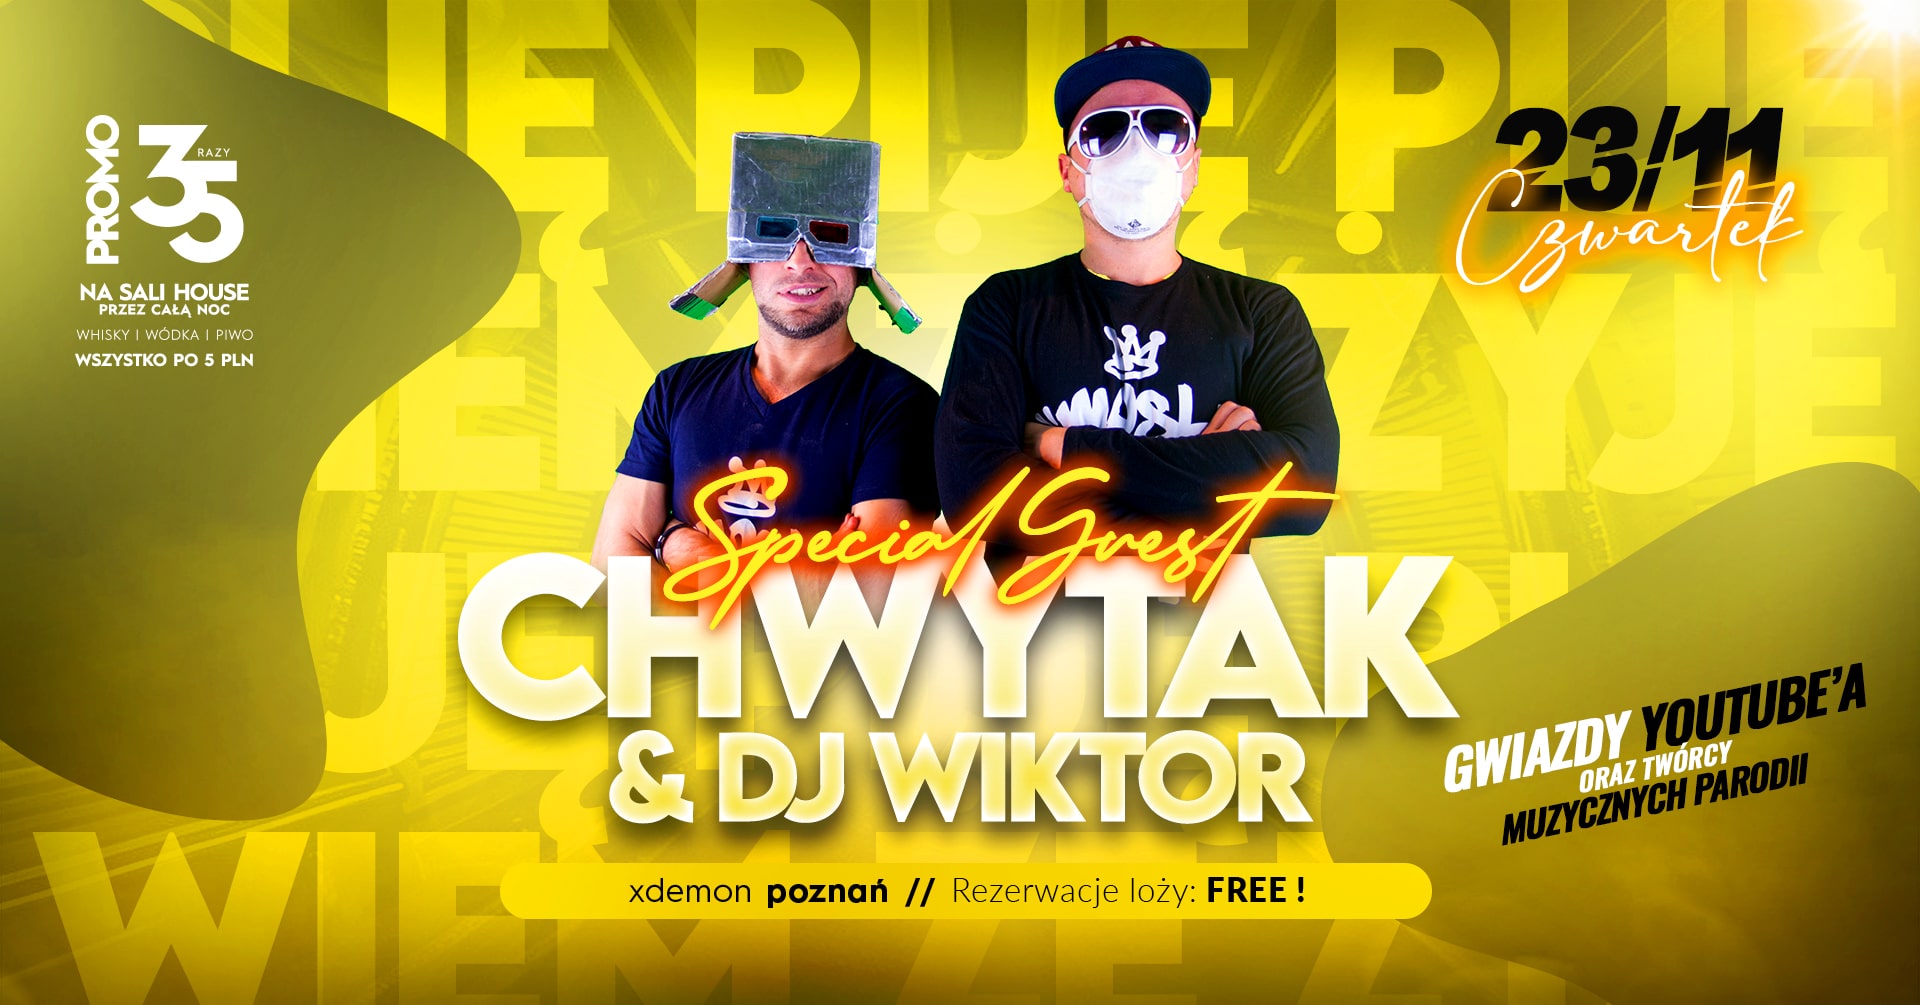 Special Guest: Chwytak & DJ Wiktor